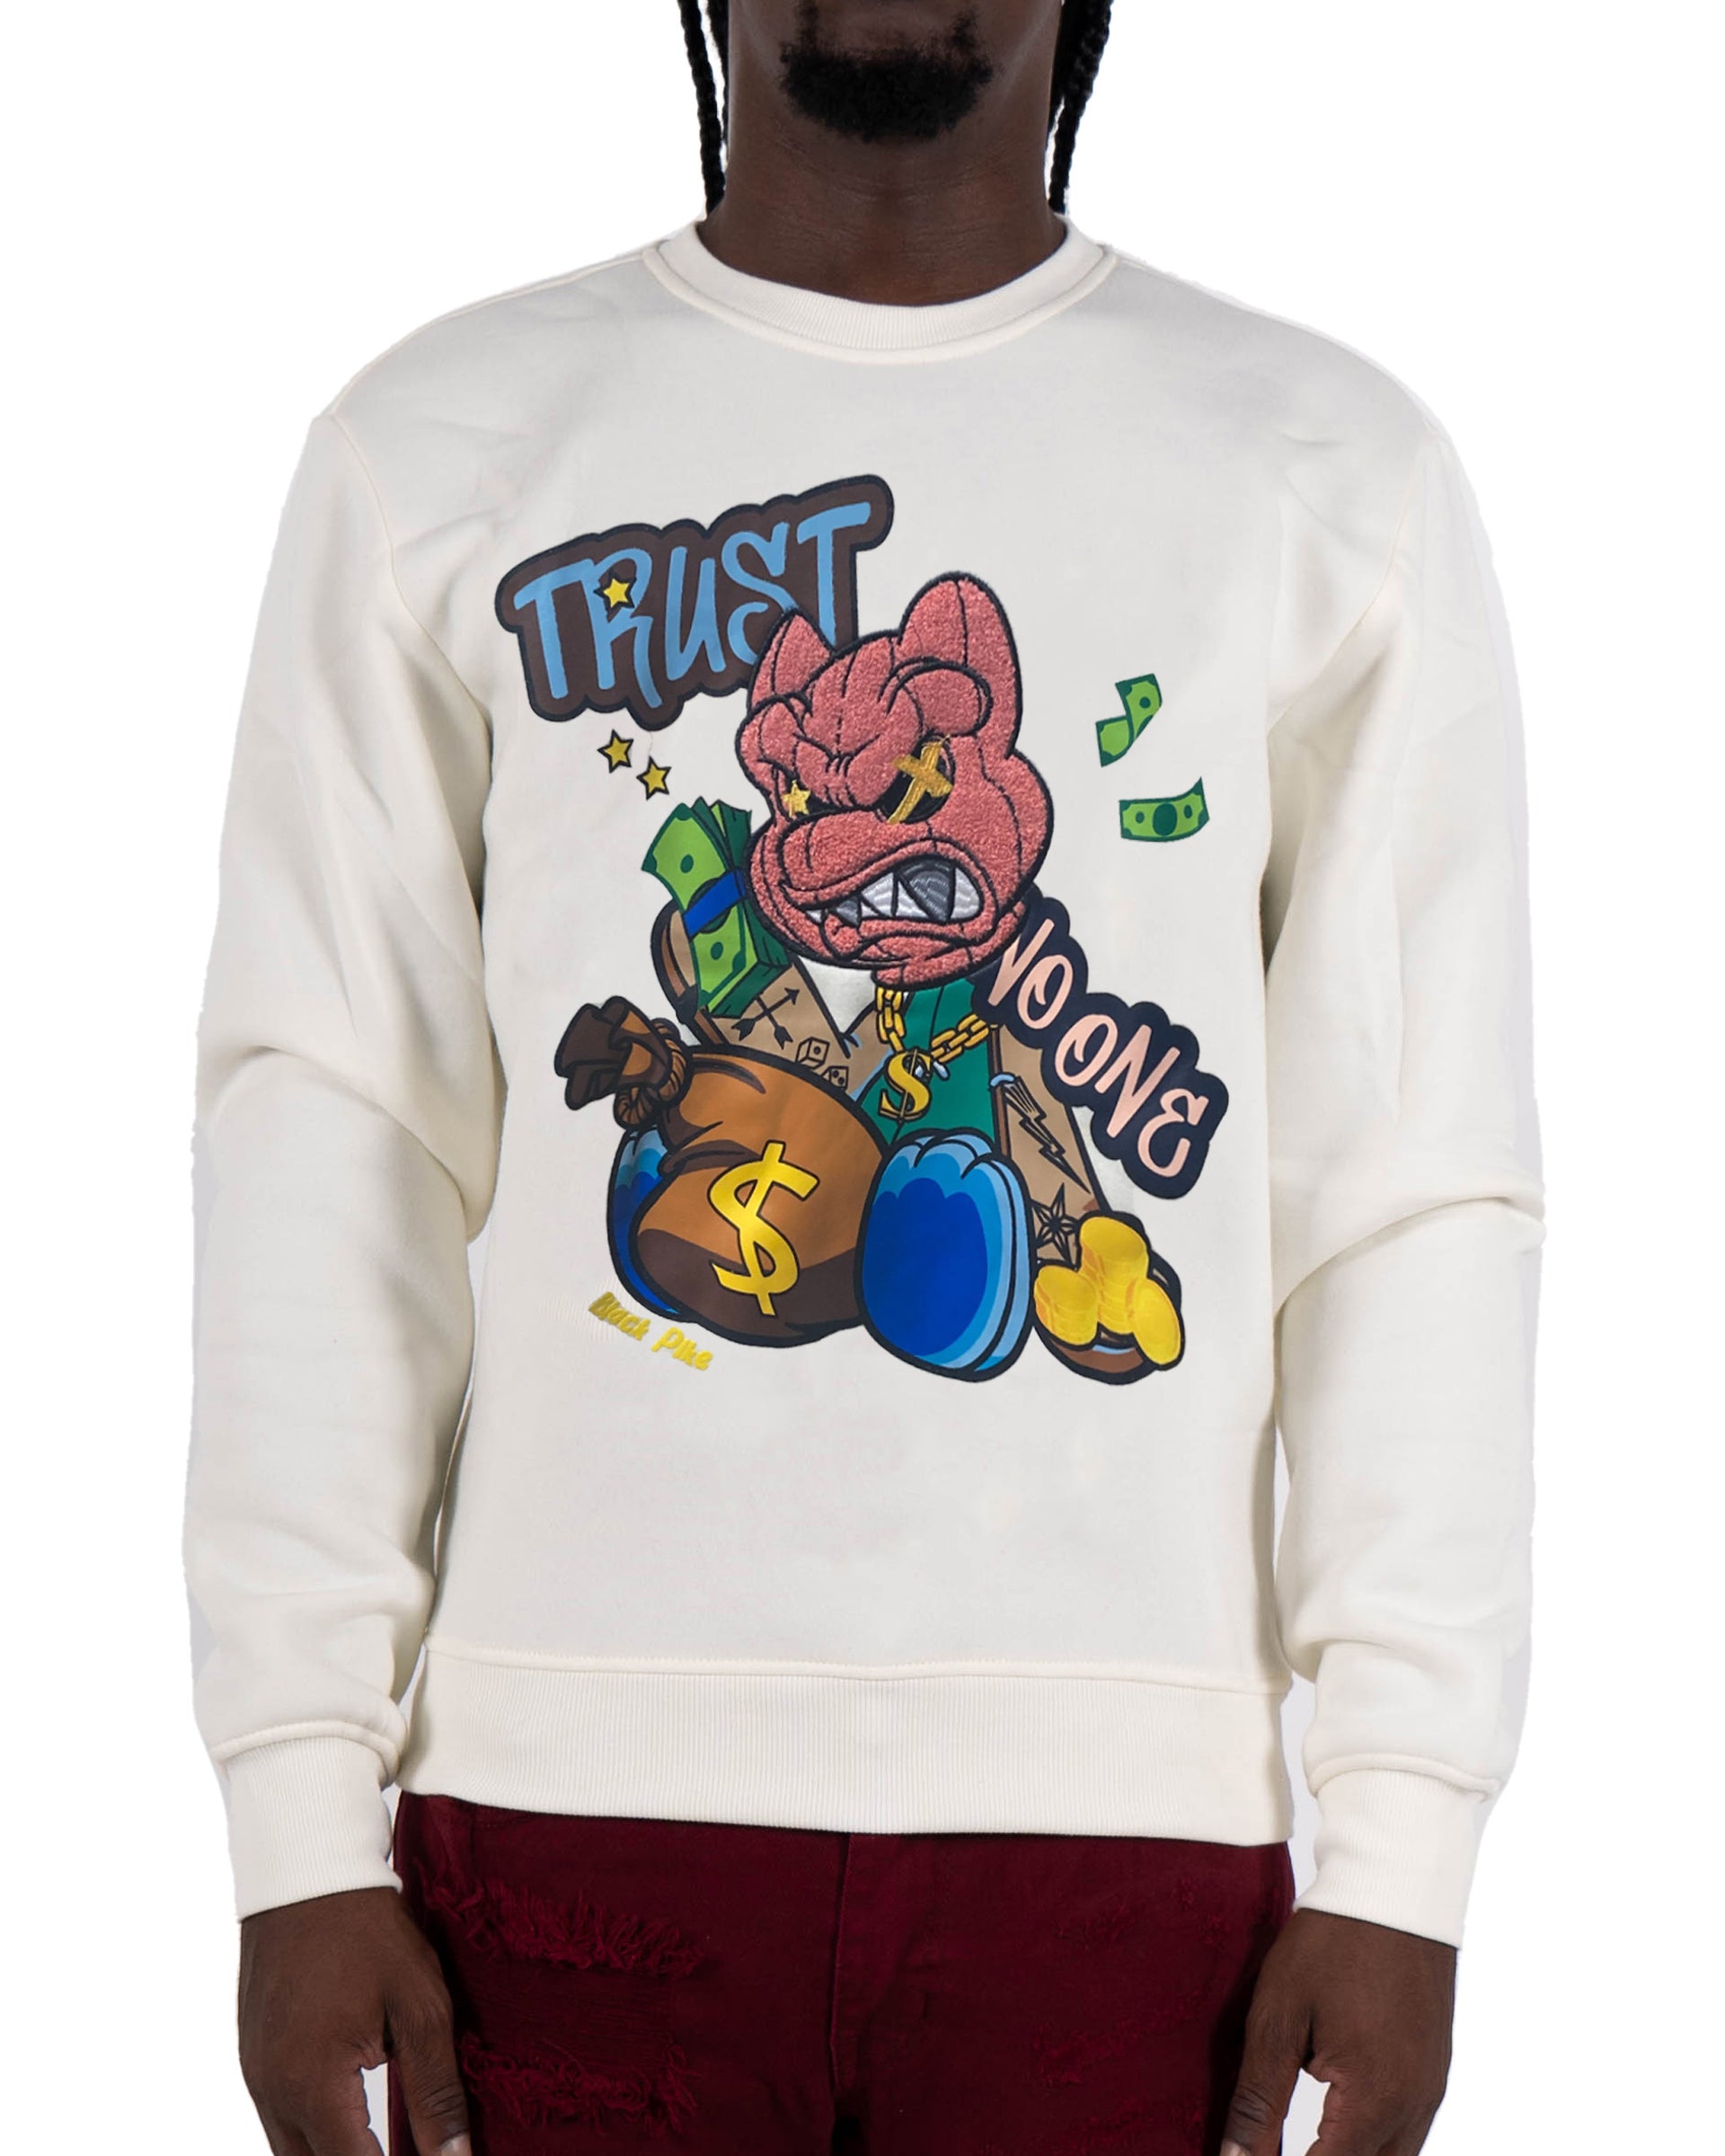 Men's "Trust No One" Graphic Embroidered Sweatshirt | Off White